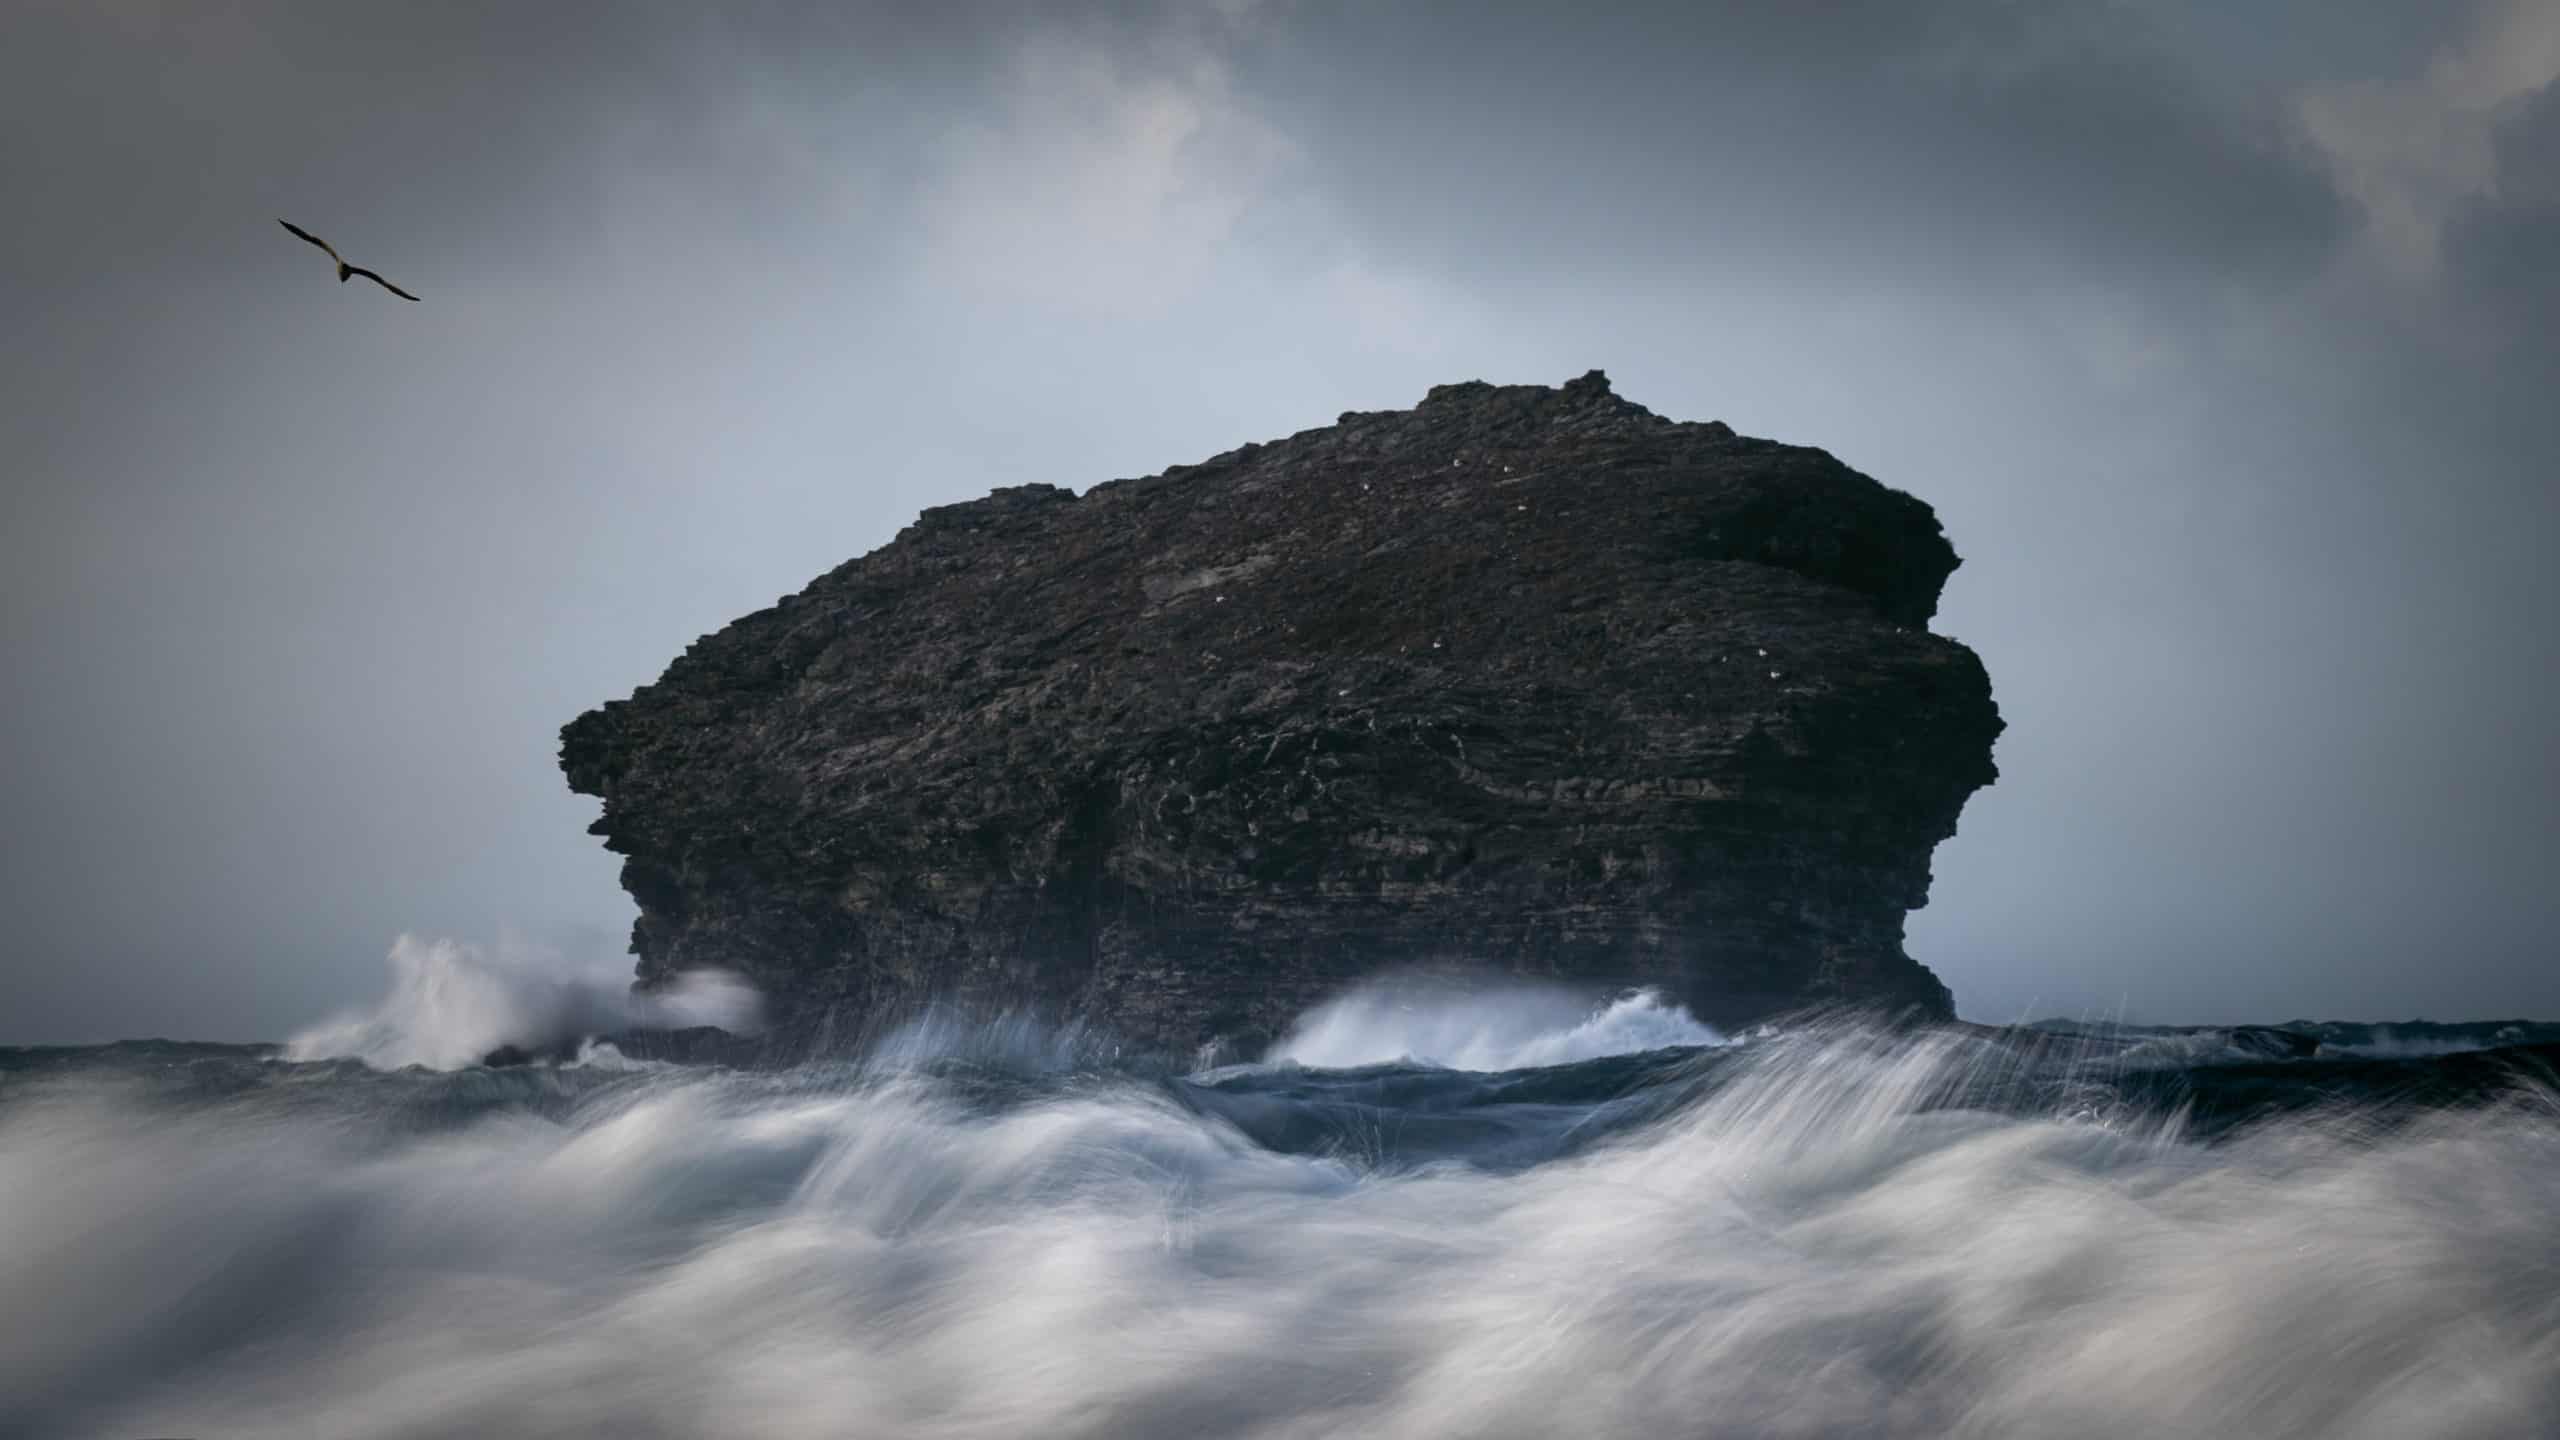 Stormy Gull rock and bird, Cornwall